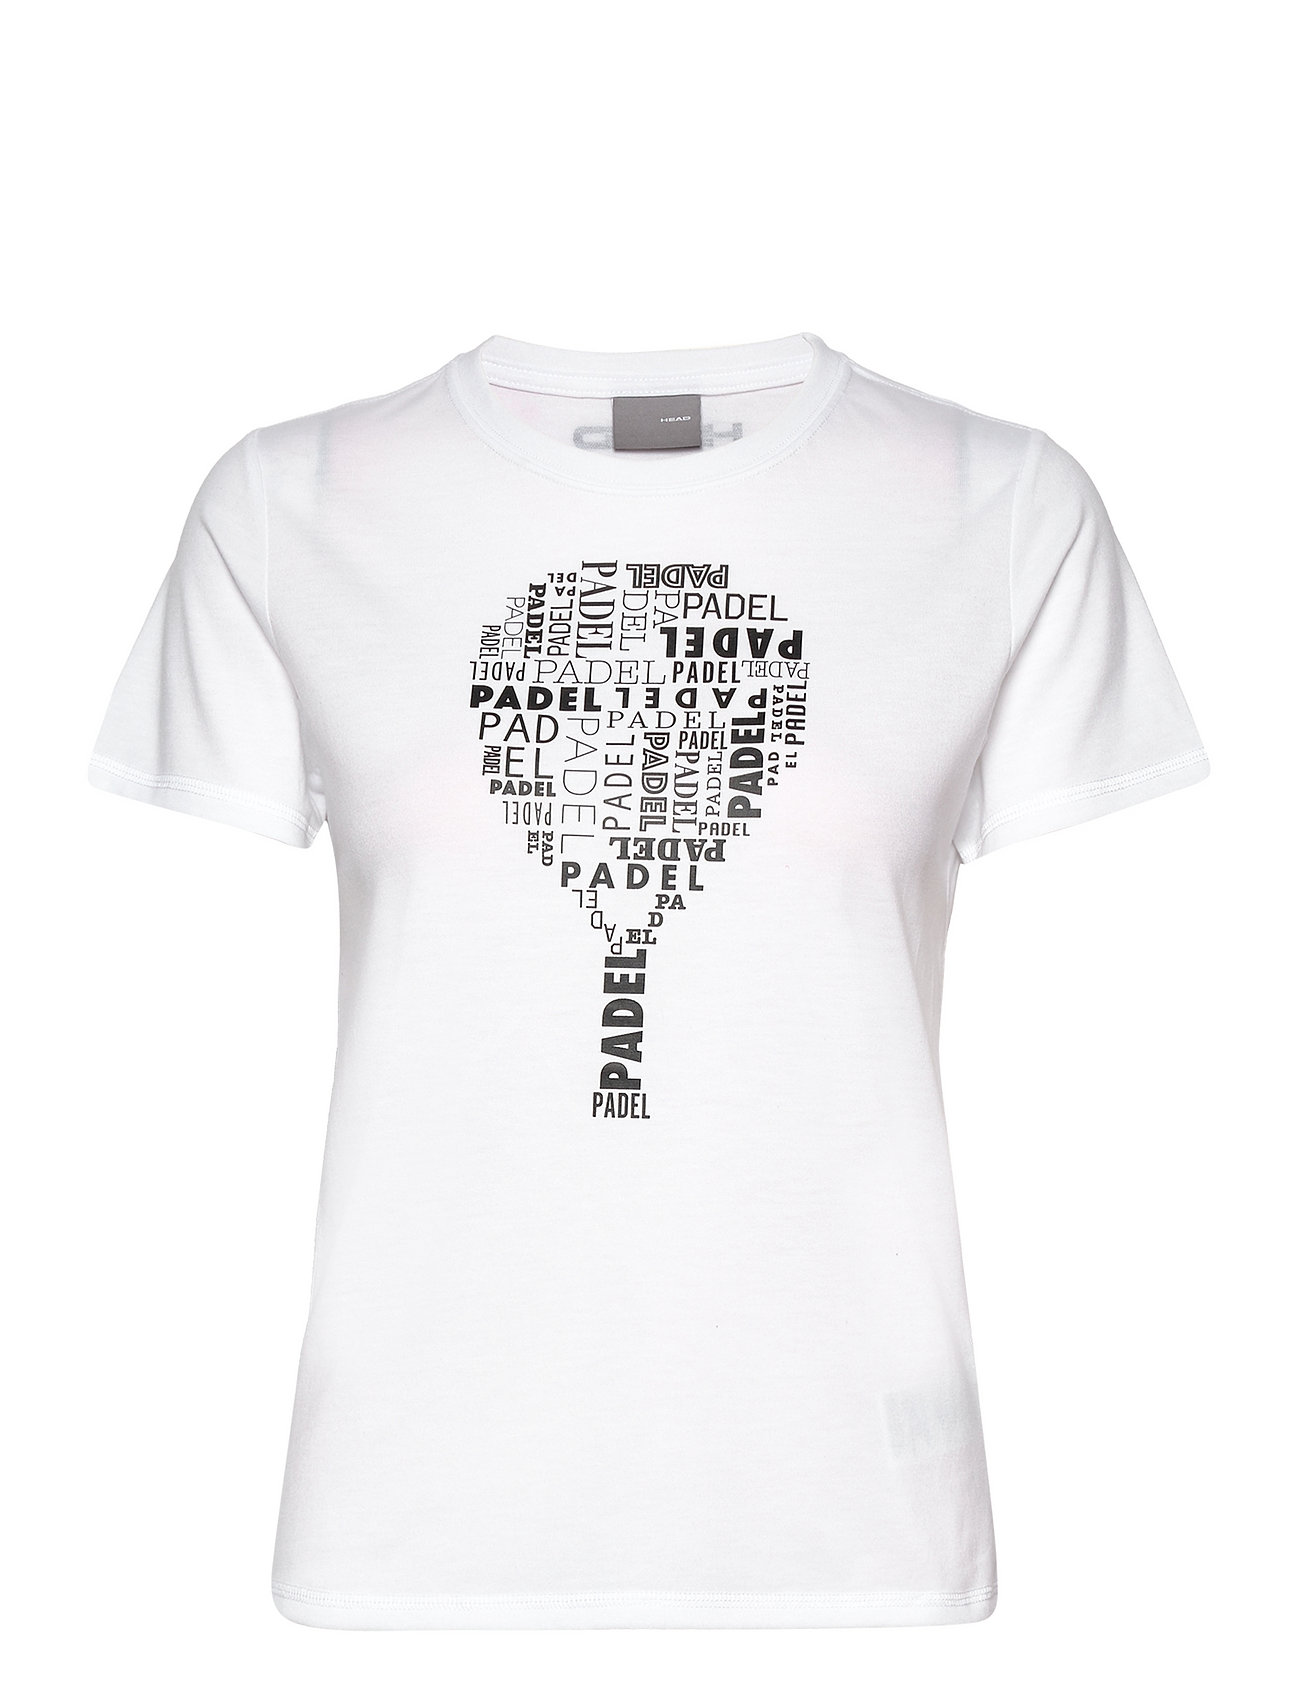 Padel Typo T-Shirt Women T-shirts & Tops Short-sleeved Vit Head